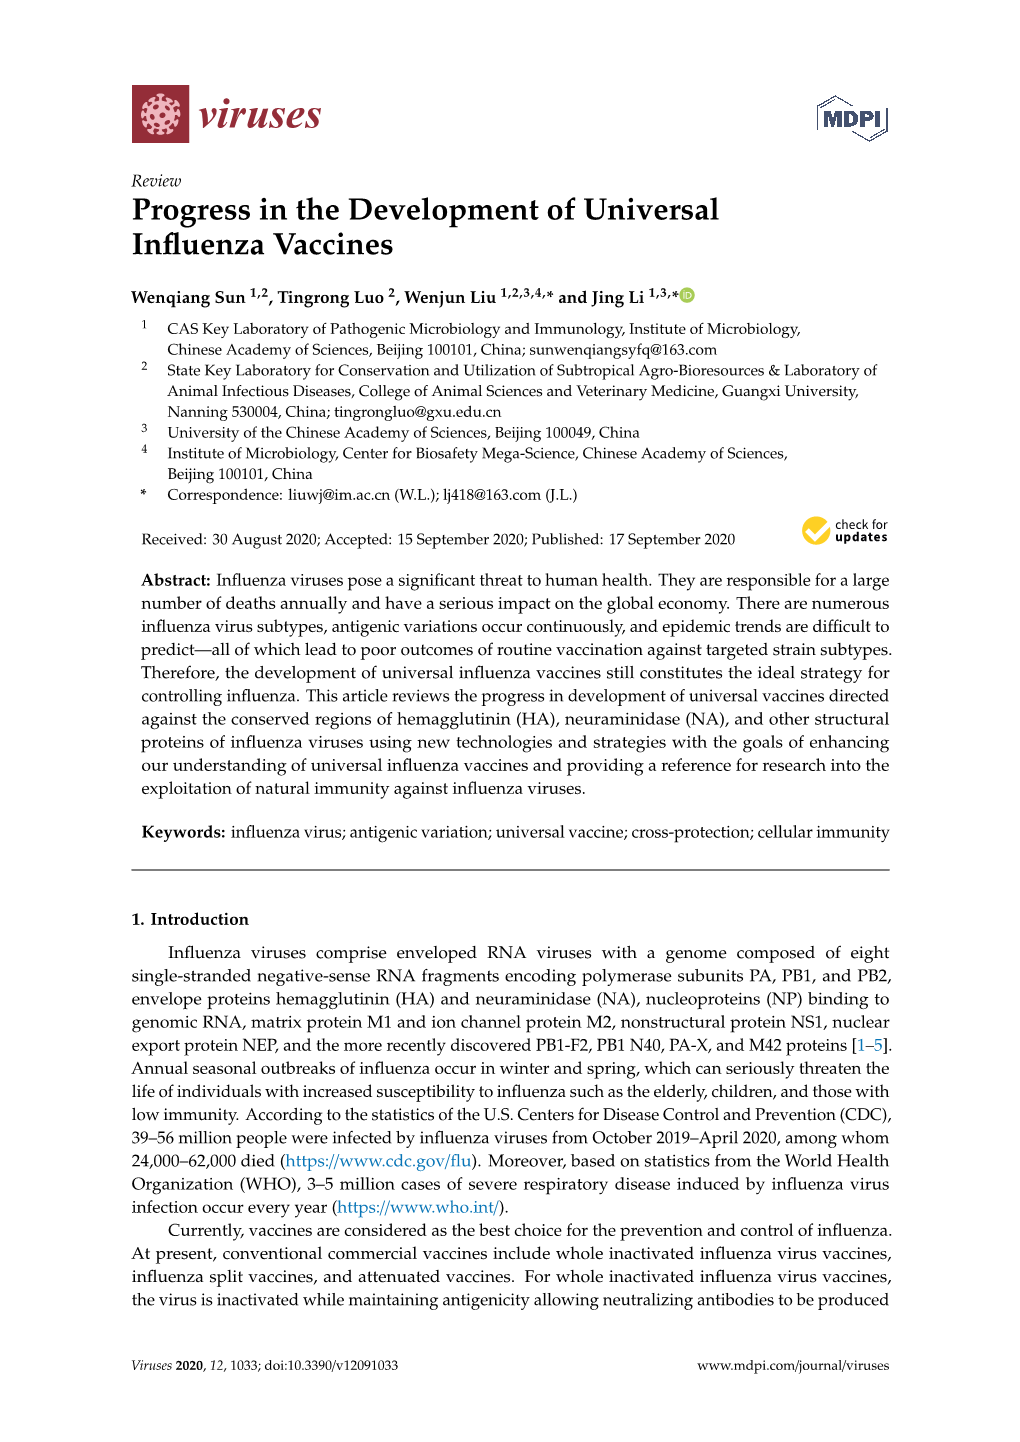 Progress in the Development of Universal Influenza Vaccines